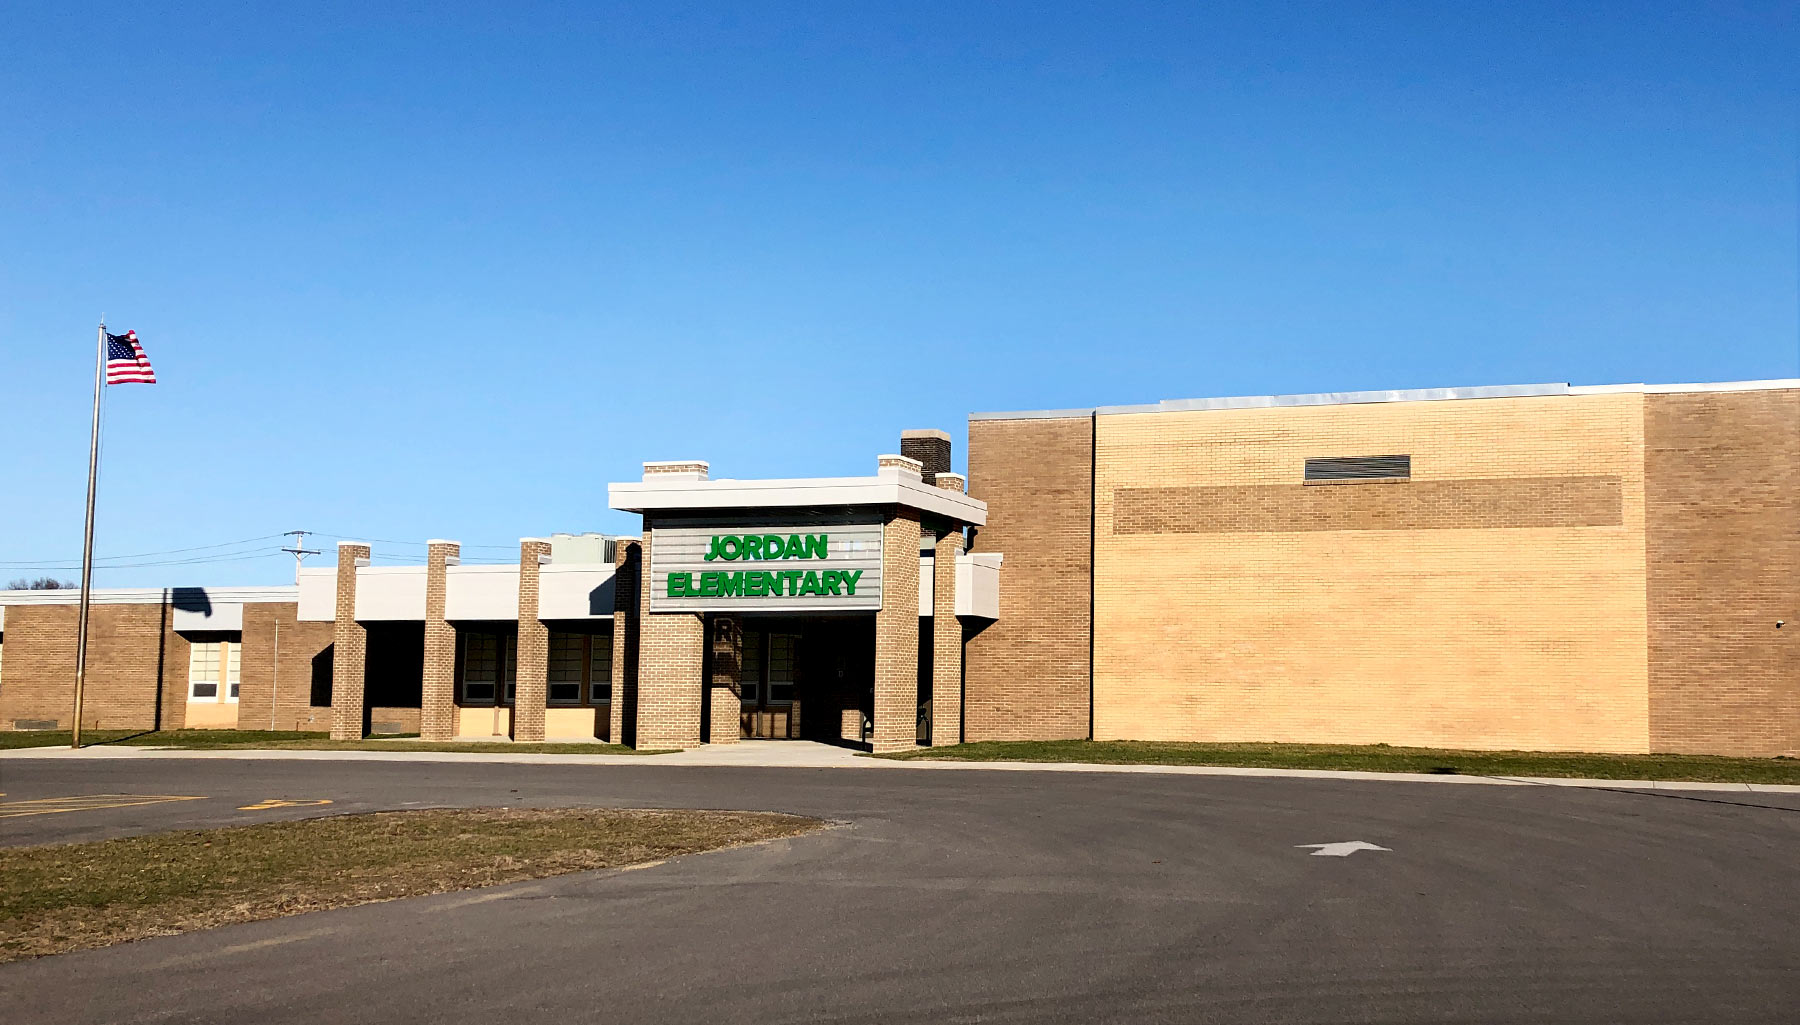 Shores Builders, Centralia City School Project For Jordan Elementary School in Centralia, Illinois